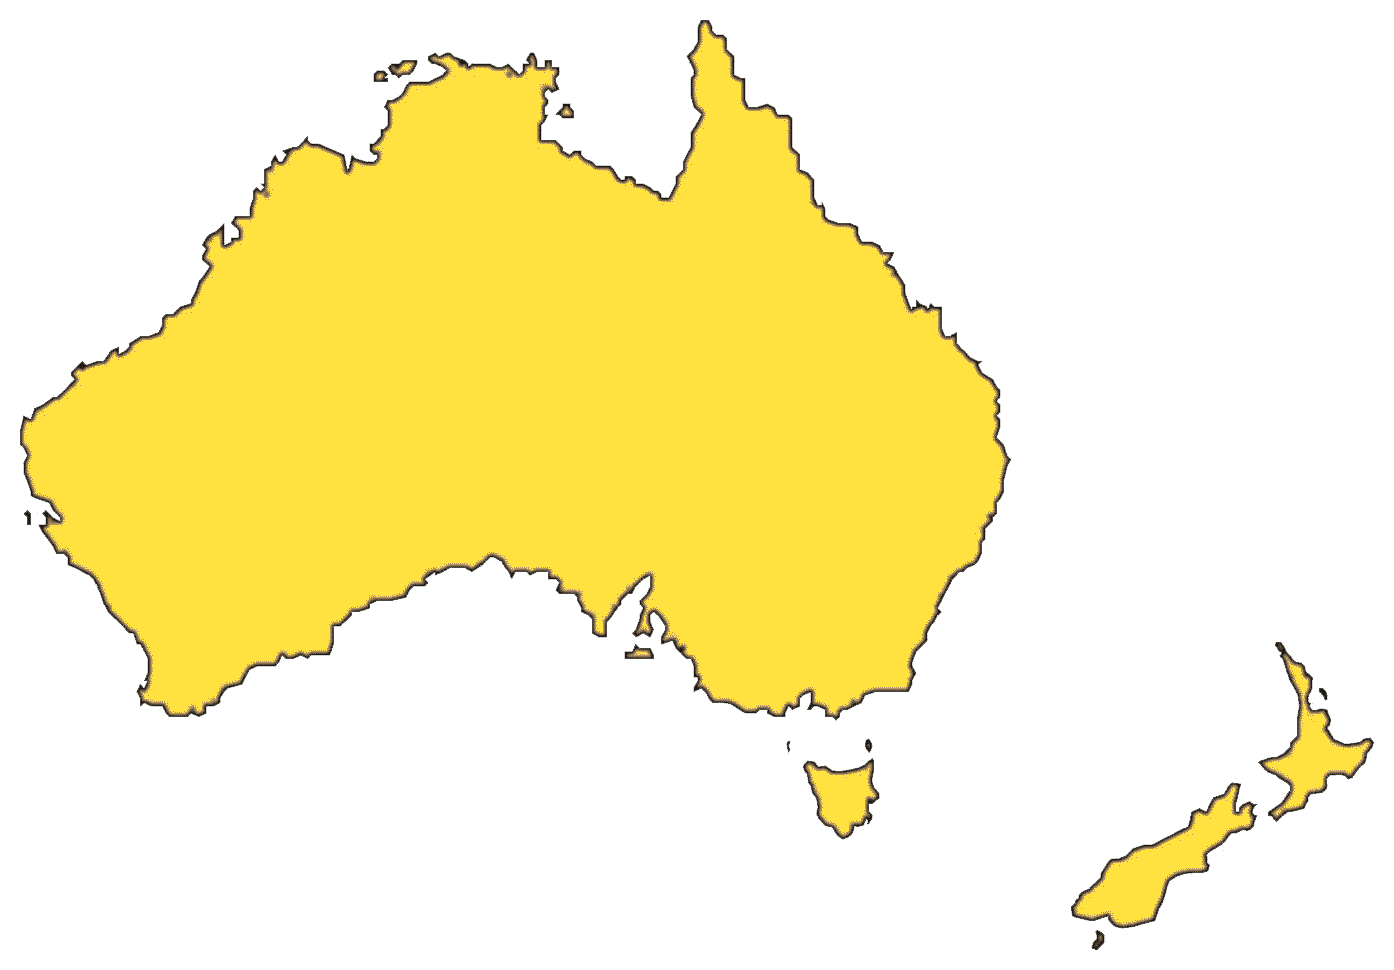 Карта картинка пнг. Геоконтур Австралии. Австралия геоконтур континента. Австралия Континент карта. Контур материка Австралия.